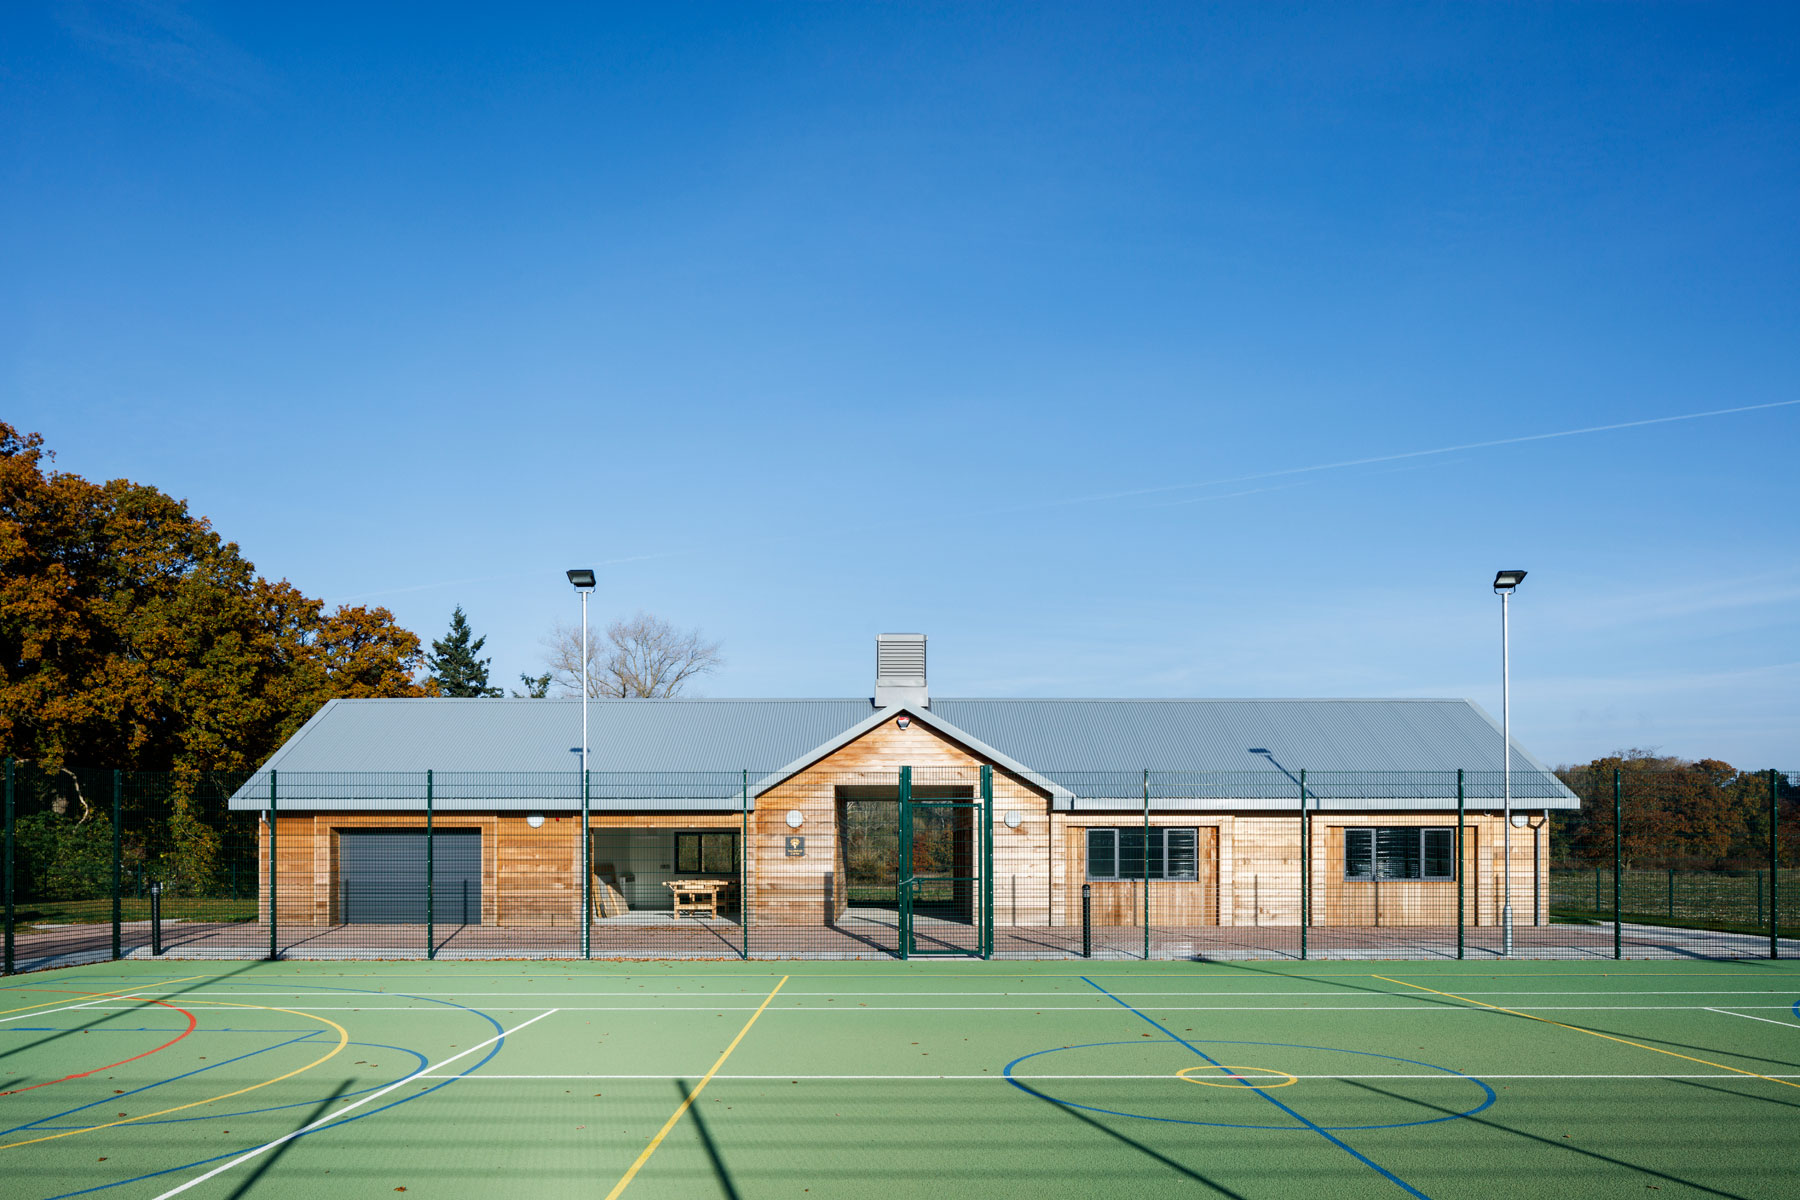 New Barn School Specialist Sports Facilities - New floodlit MUGA